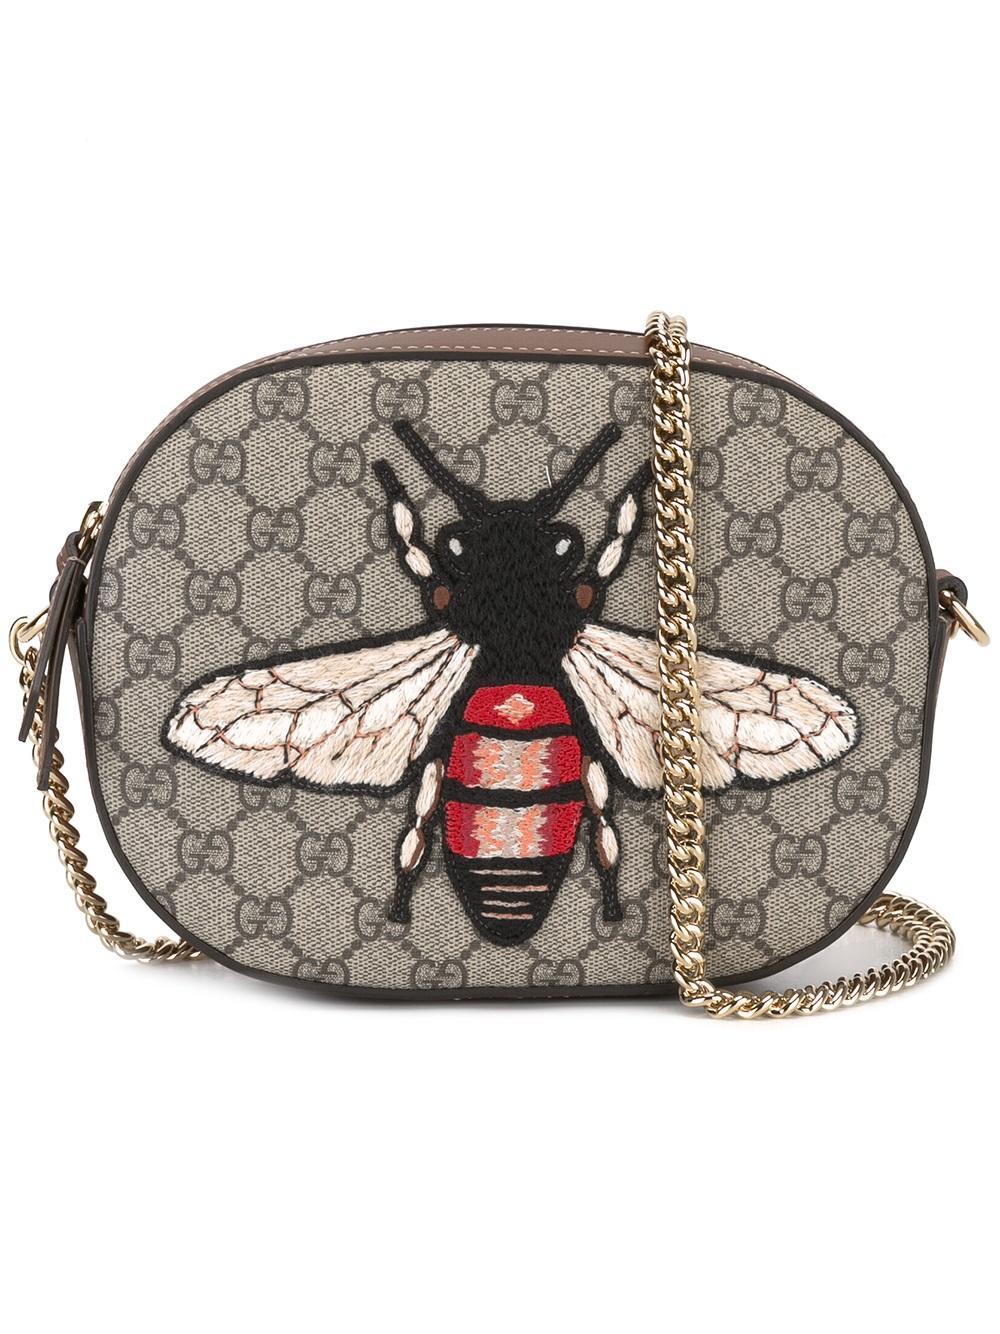 Gucci Leather Mini Gg Supreme Bee Bag in Brown - Lyst